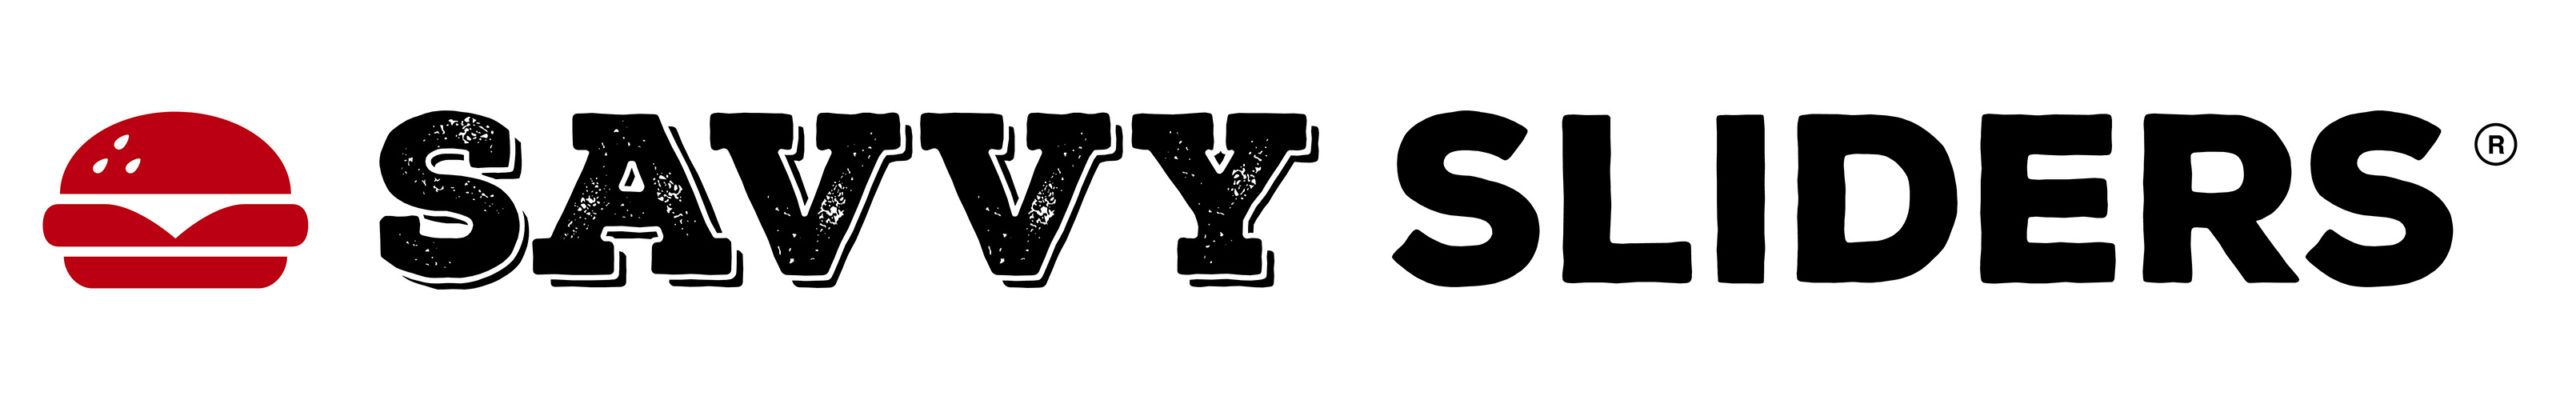 Savvy Sliders - Logo